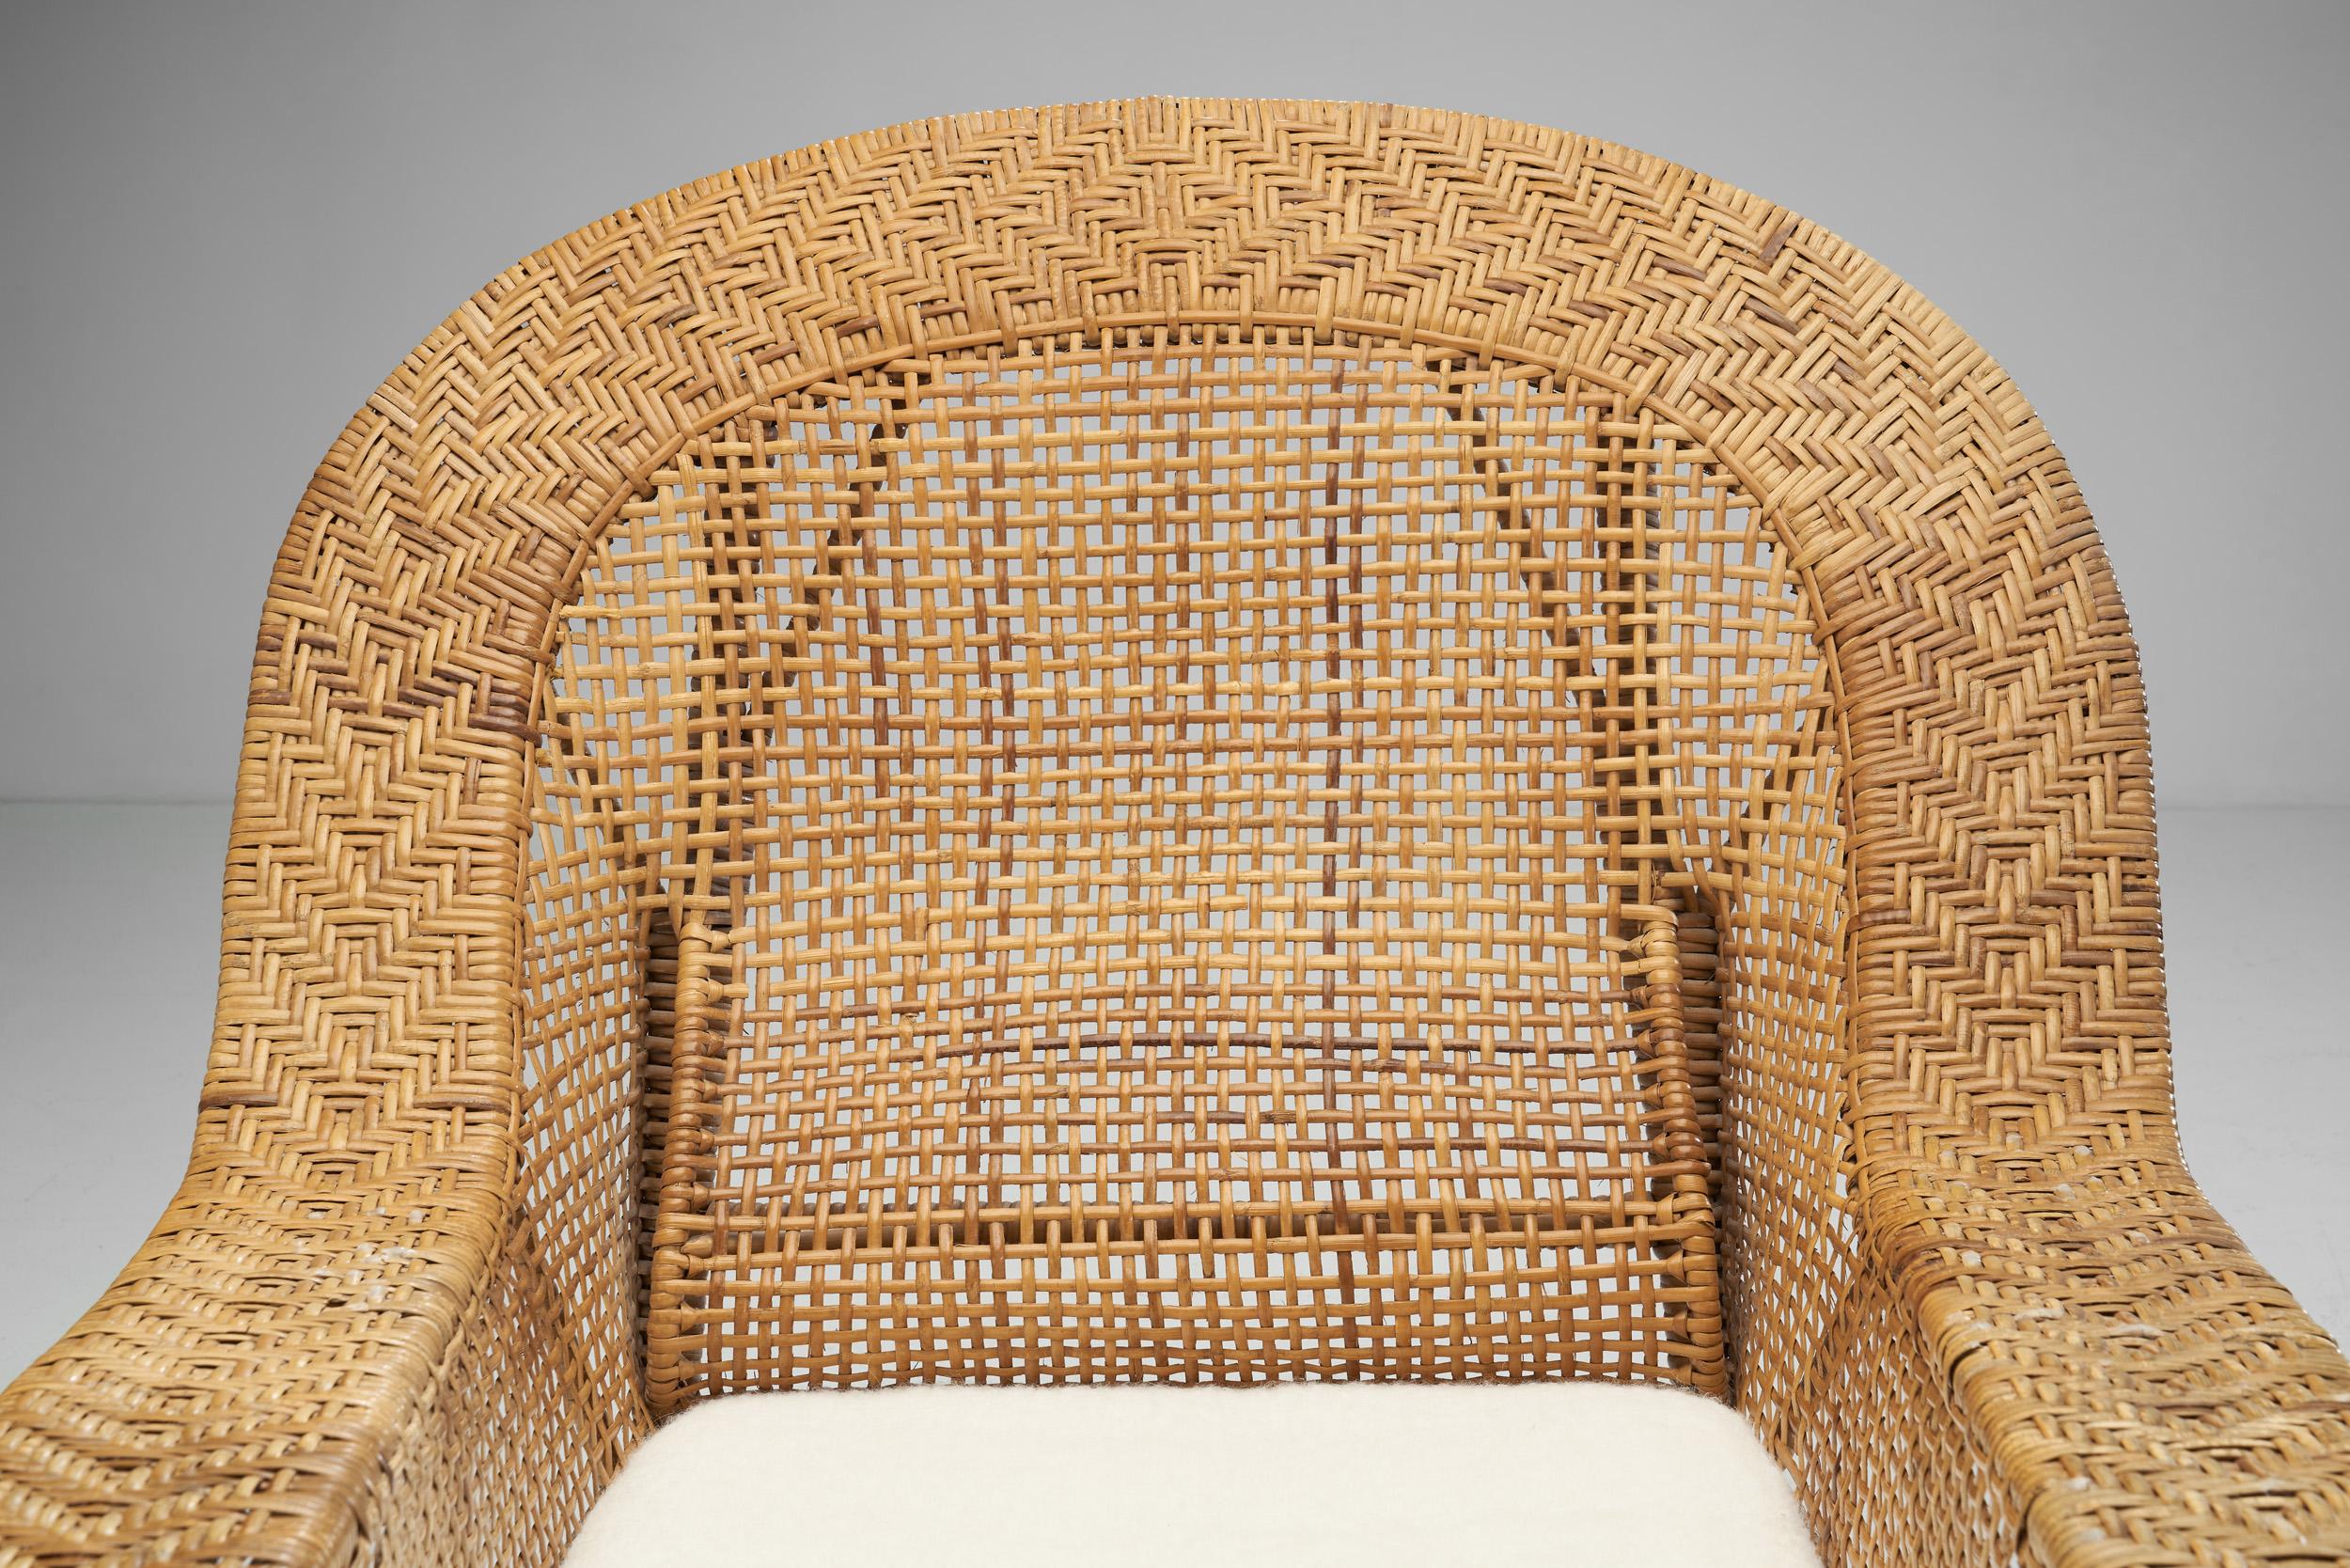 Fabric Kay Fisker “Canton” Woven Wicker Lounge Chair for Robert Wengler, Denmark 1950s